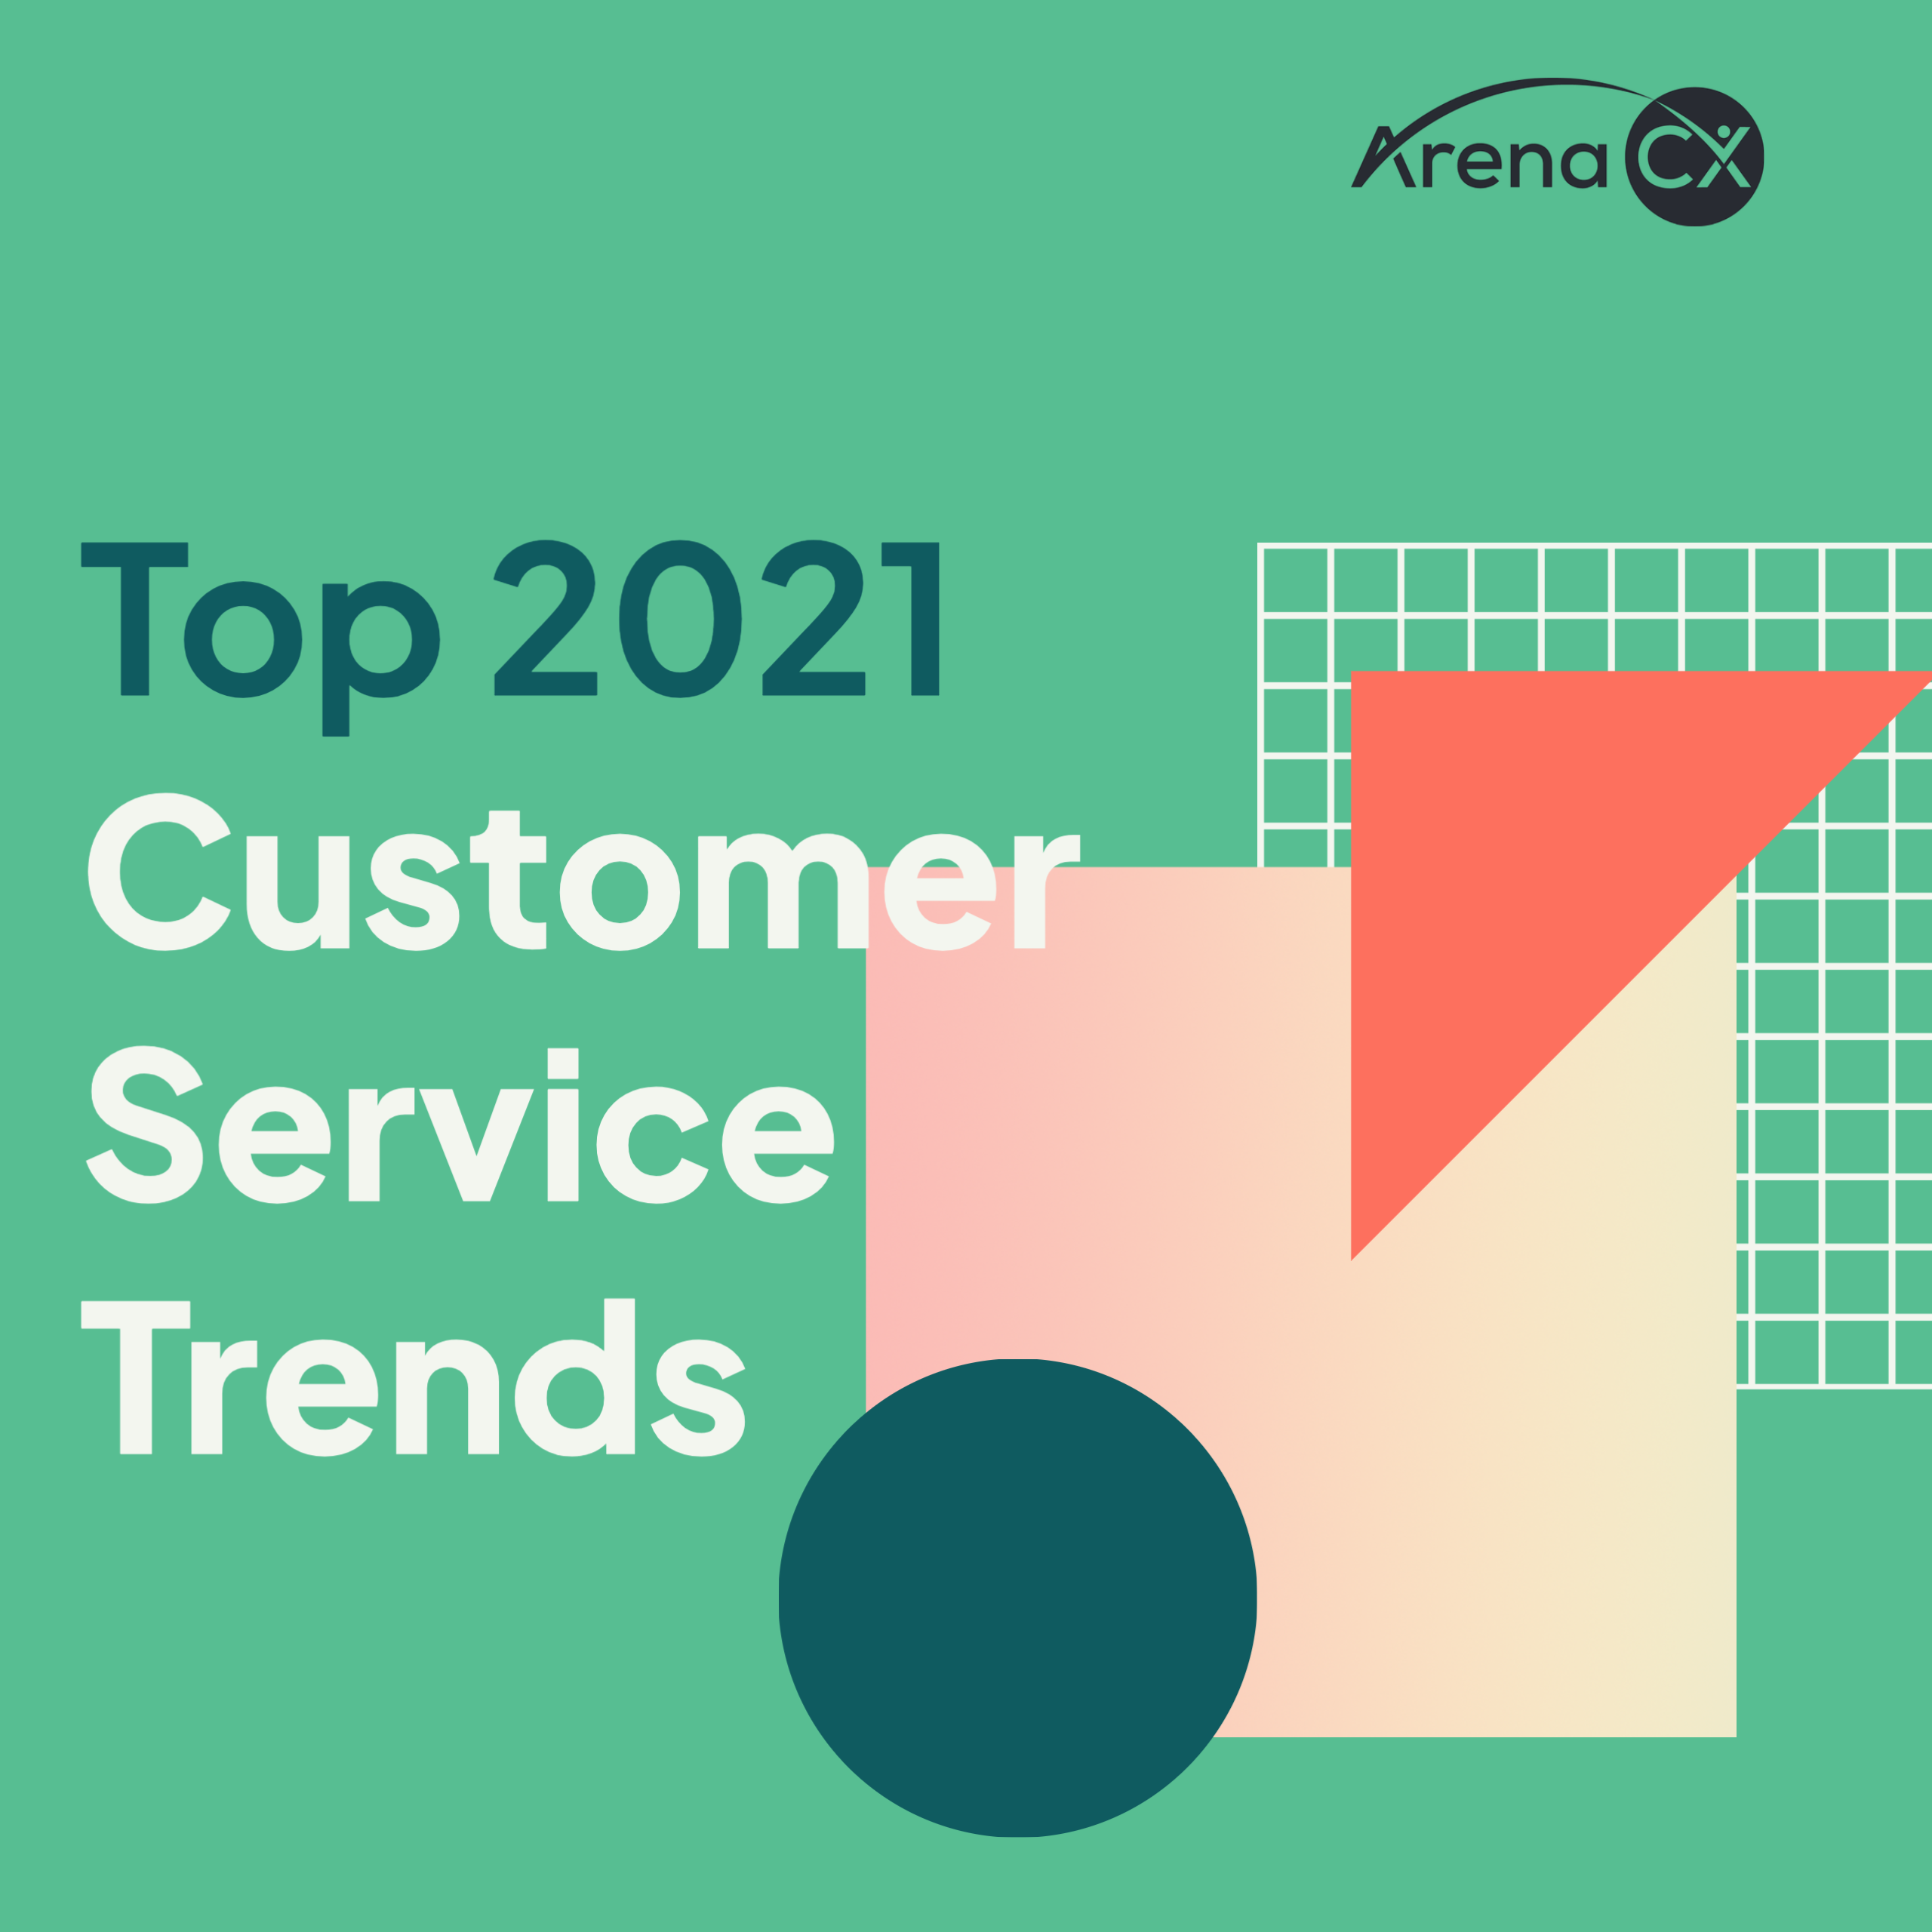 Top 2021 Customer Service Trends